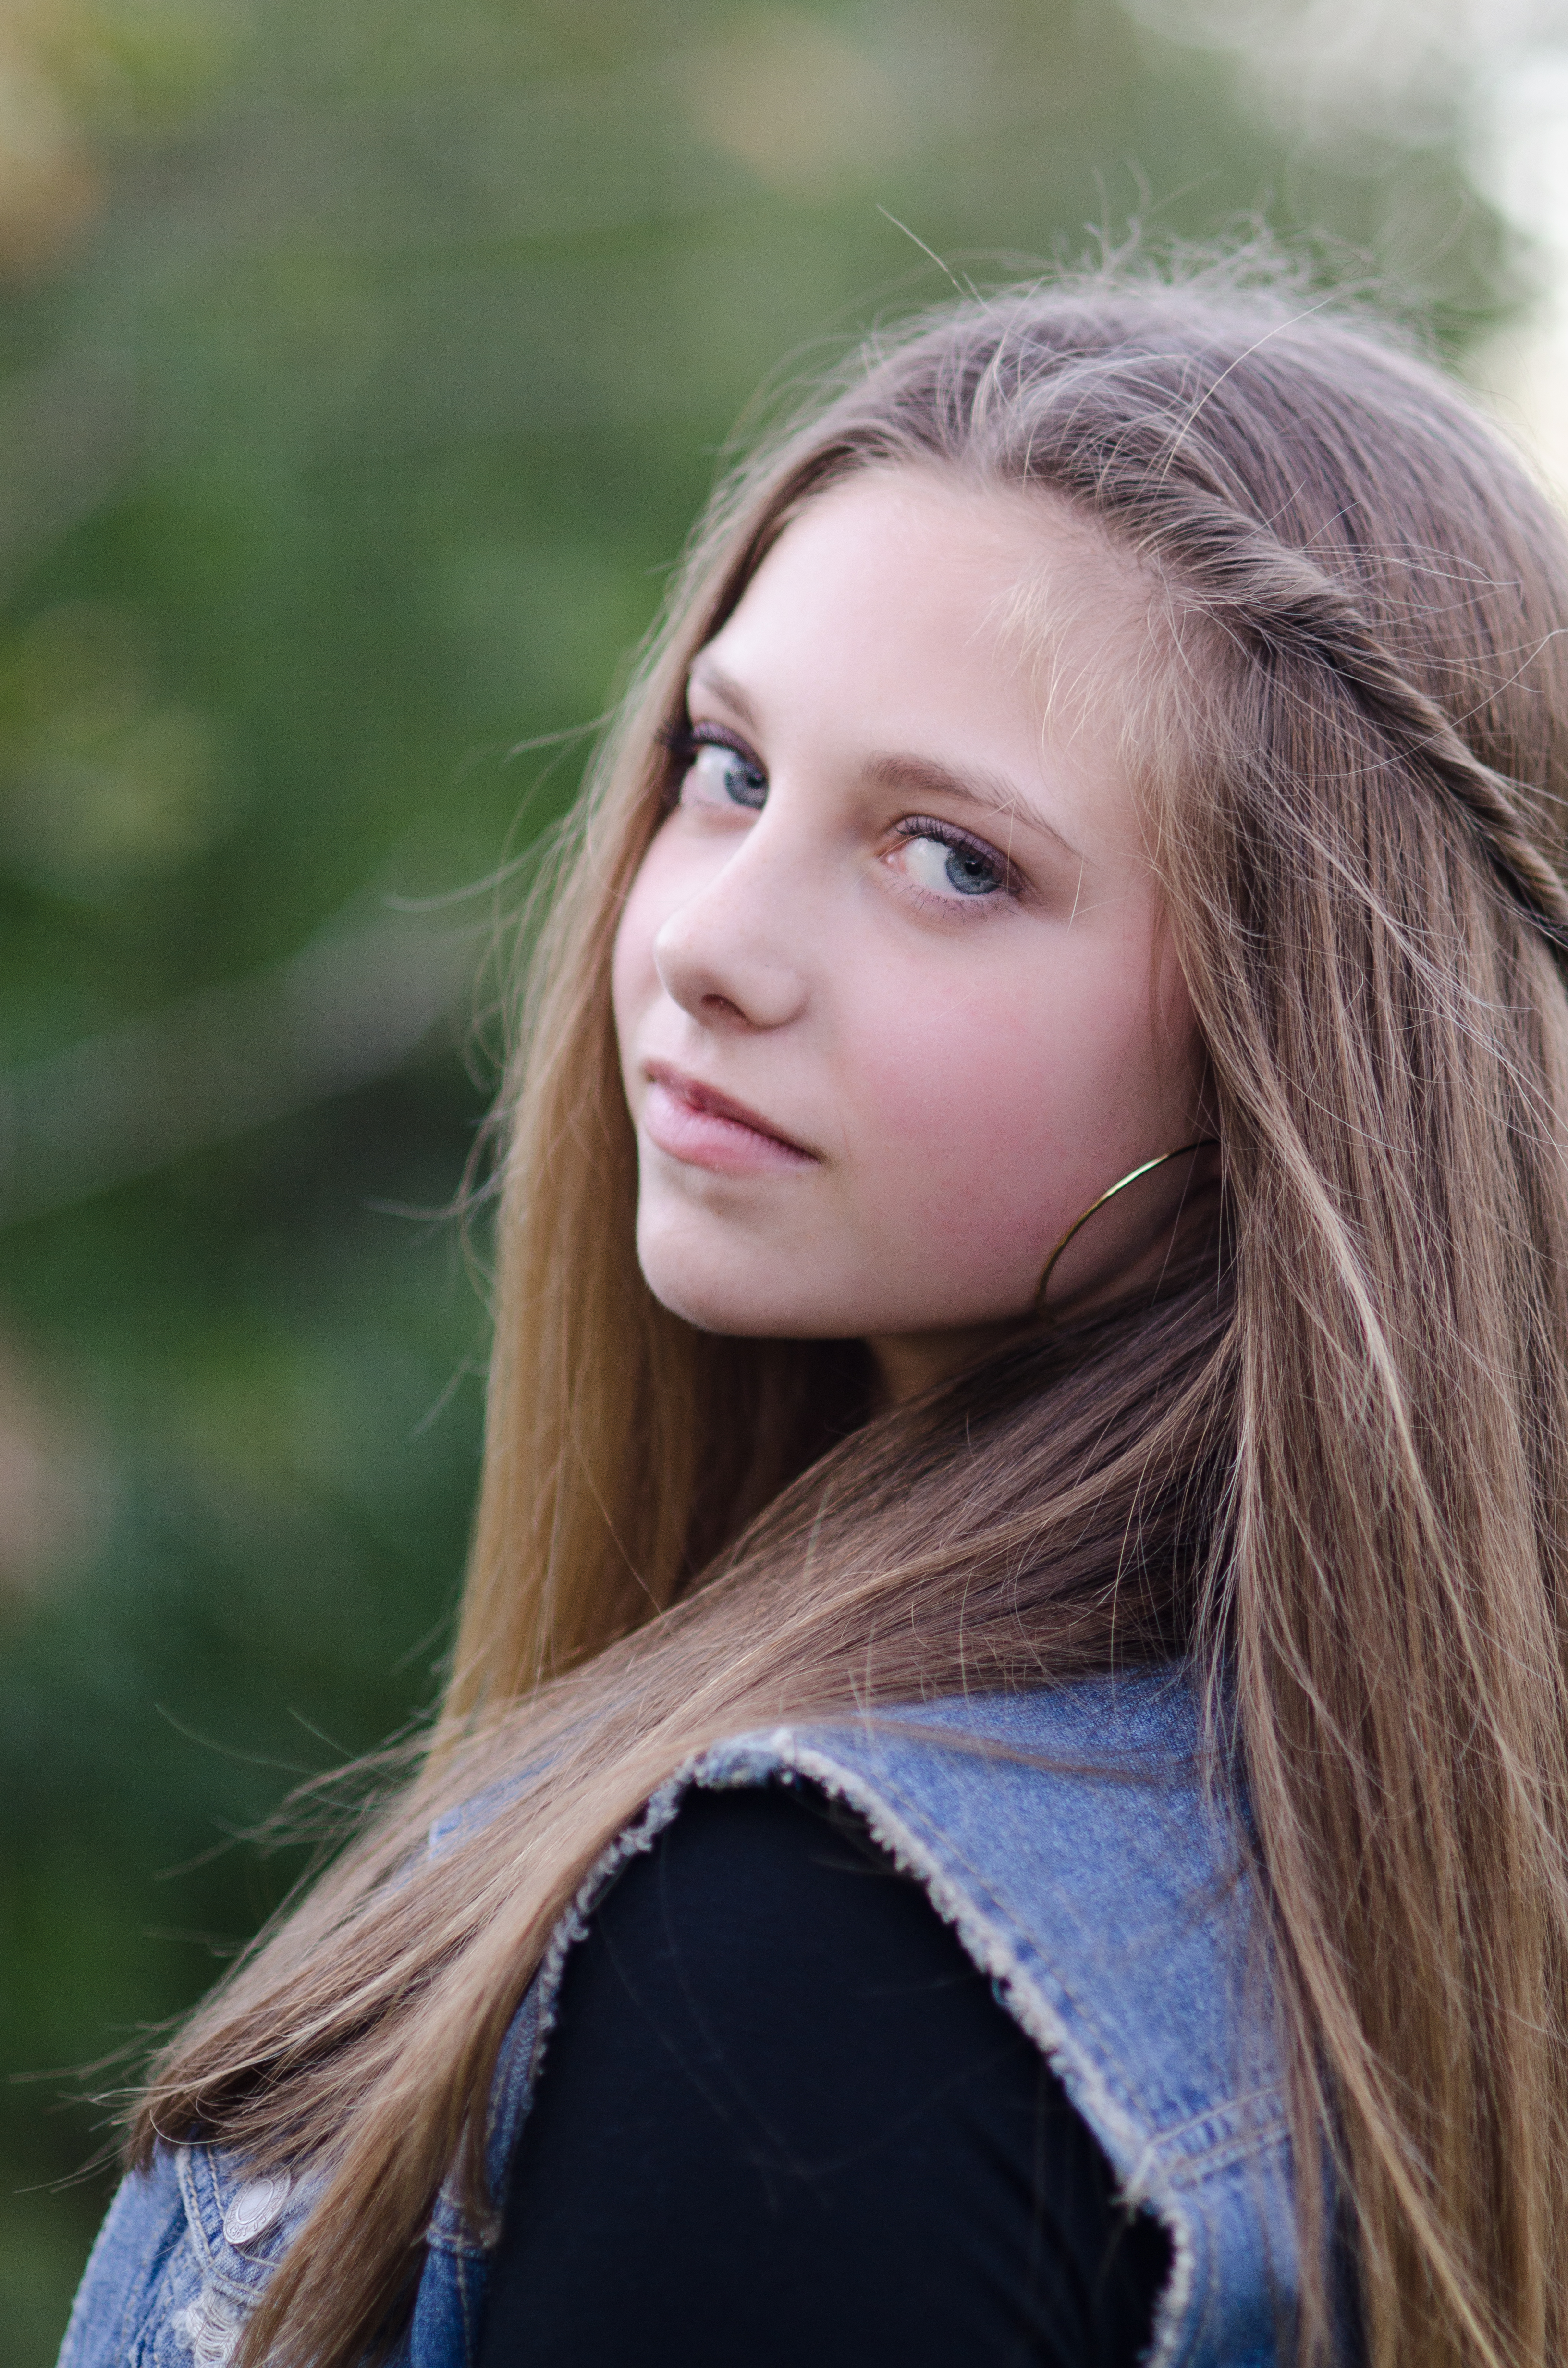 Молодая девушка 14 лет. Портрет 14 лет. Девушки 14 лет красивые портрет. Портрет 14-15 лет. Портрет 14-15 лет cam.